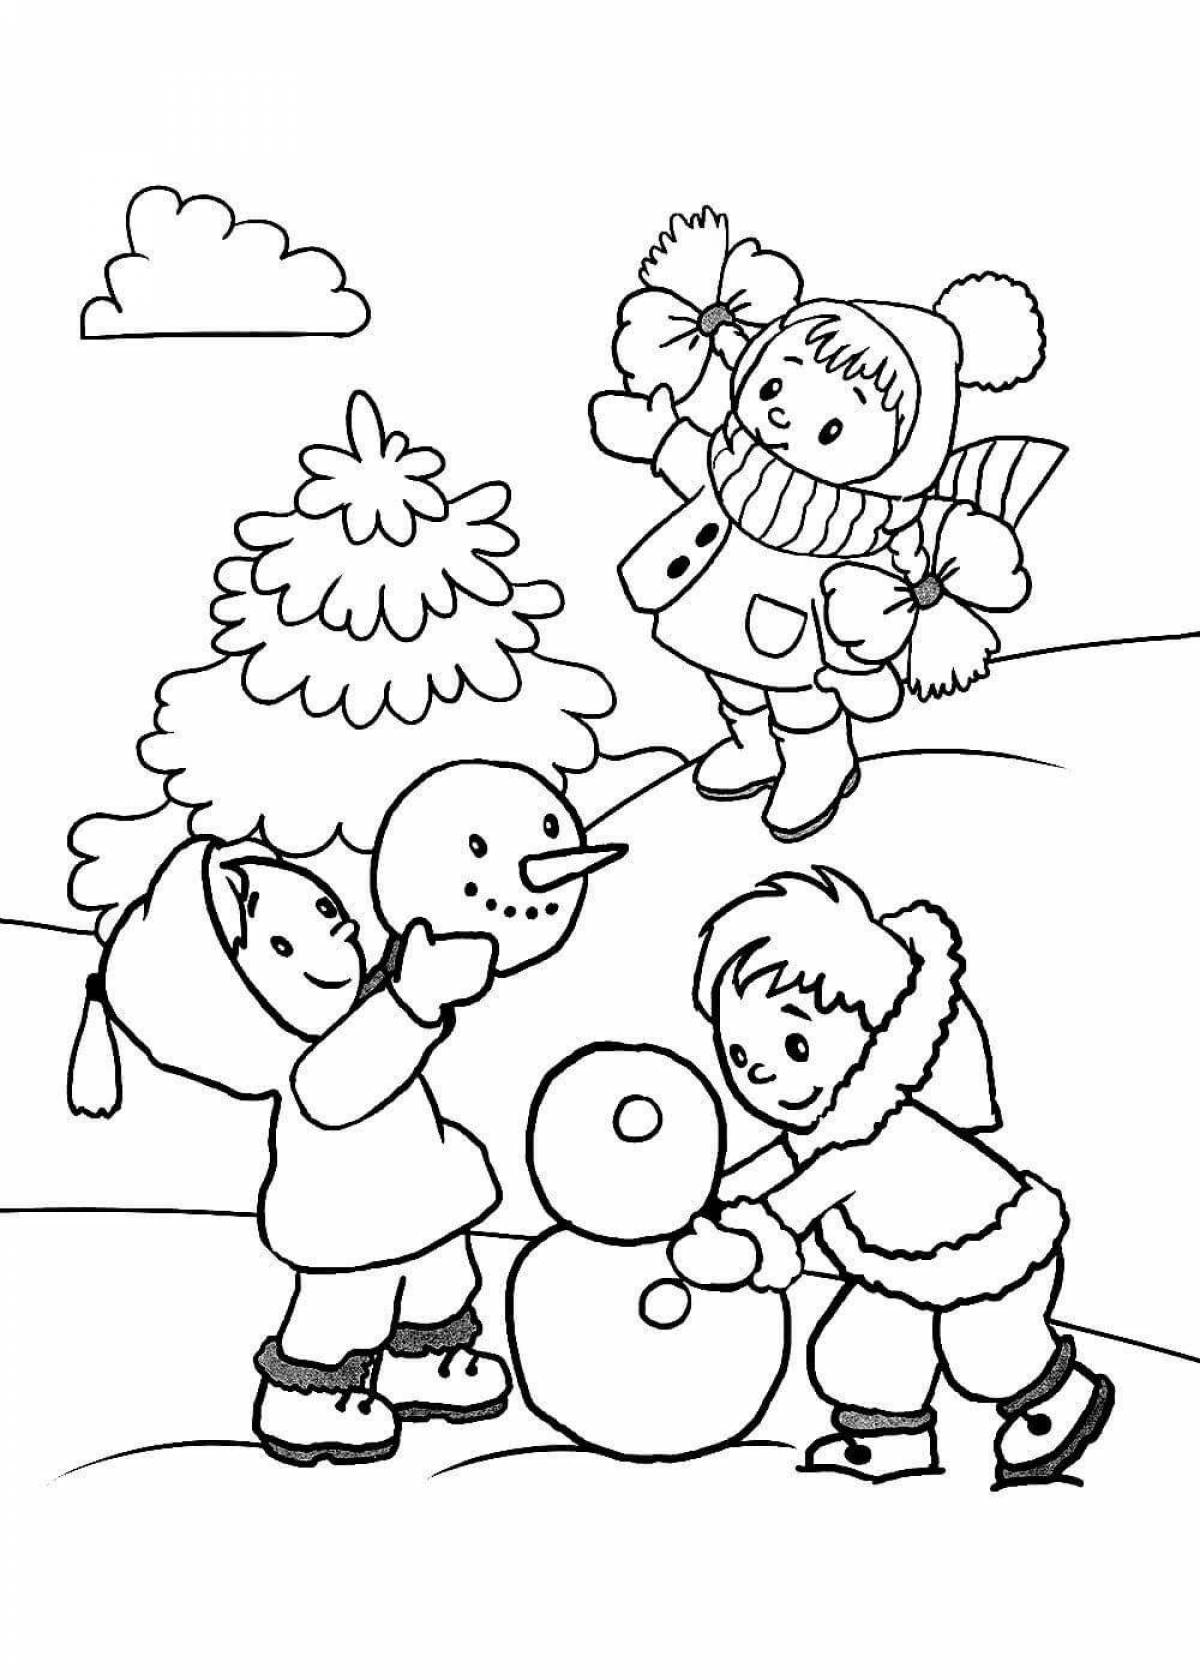 Jovial coloring page drawing winter fun подготовительная группа